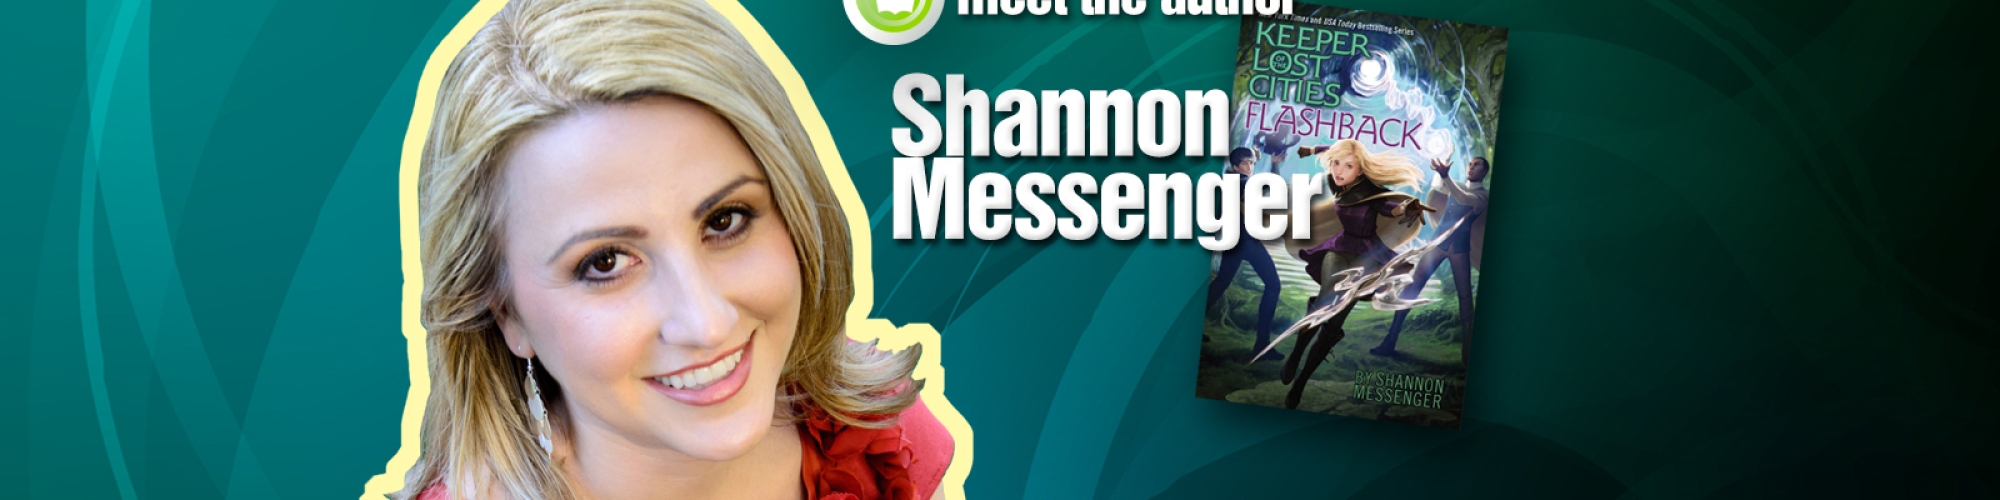 Meet the Author: Shannon Messenger